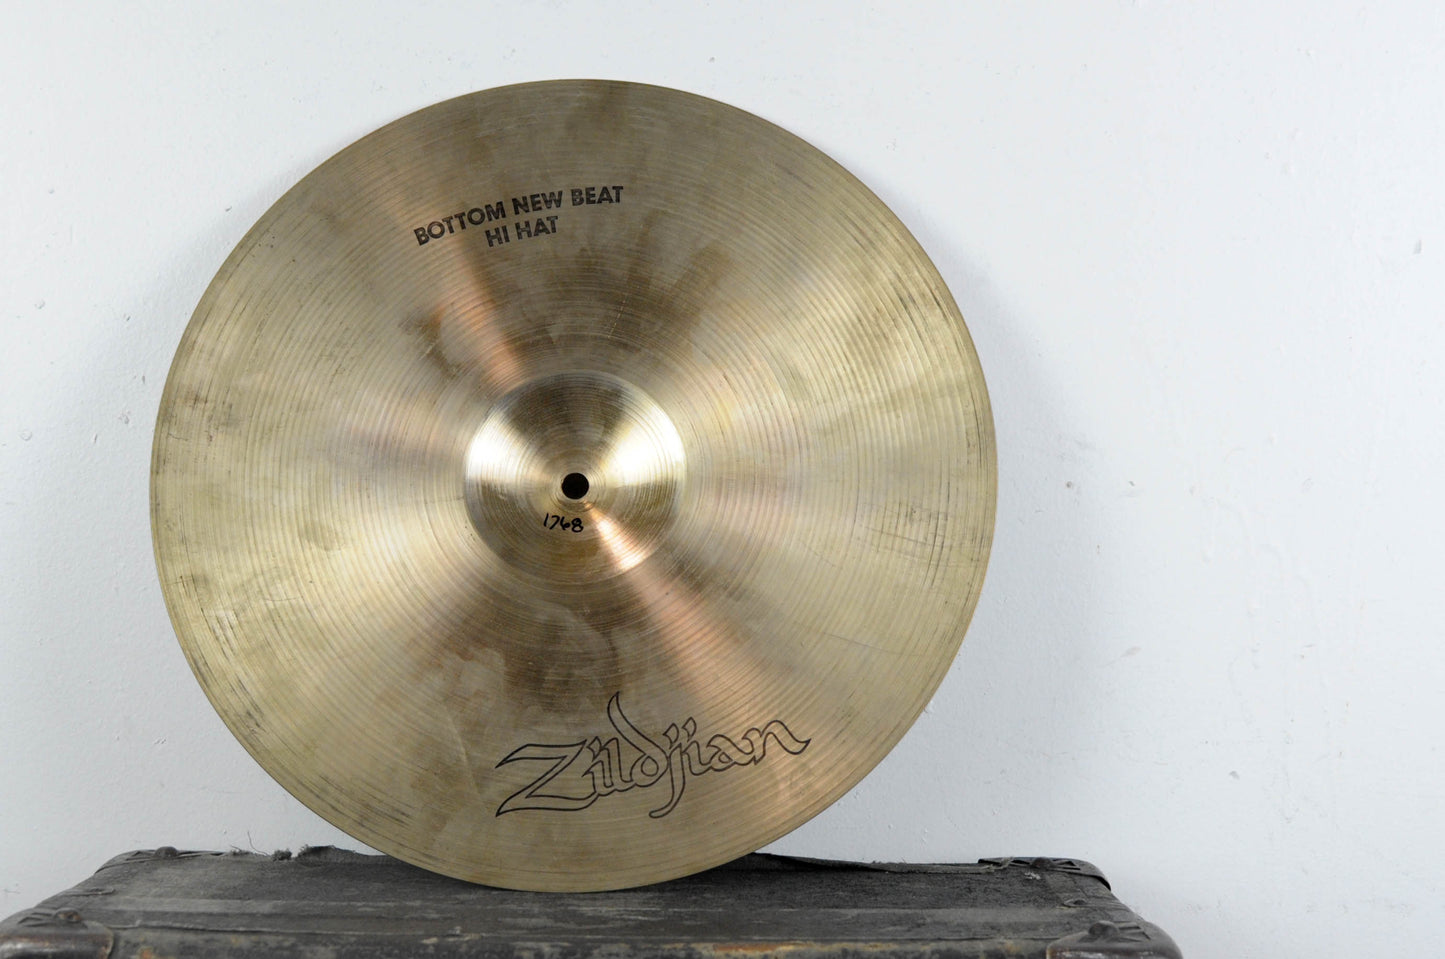 1970s Zildjian A 15" New Beat Hi Hat Cymbal Bottom 1768g